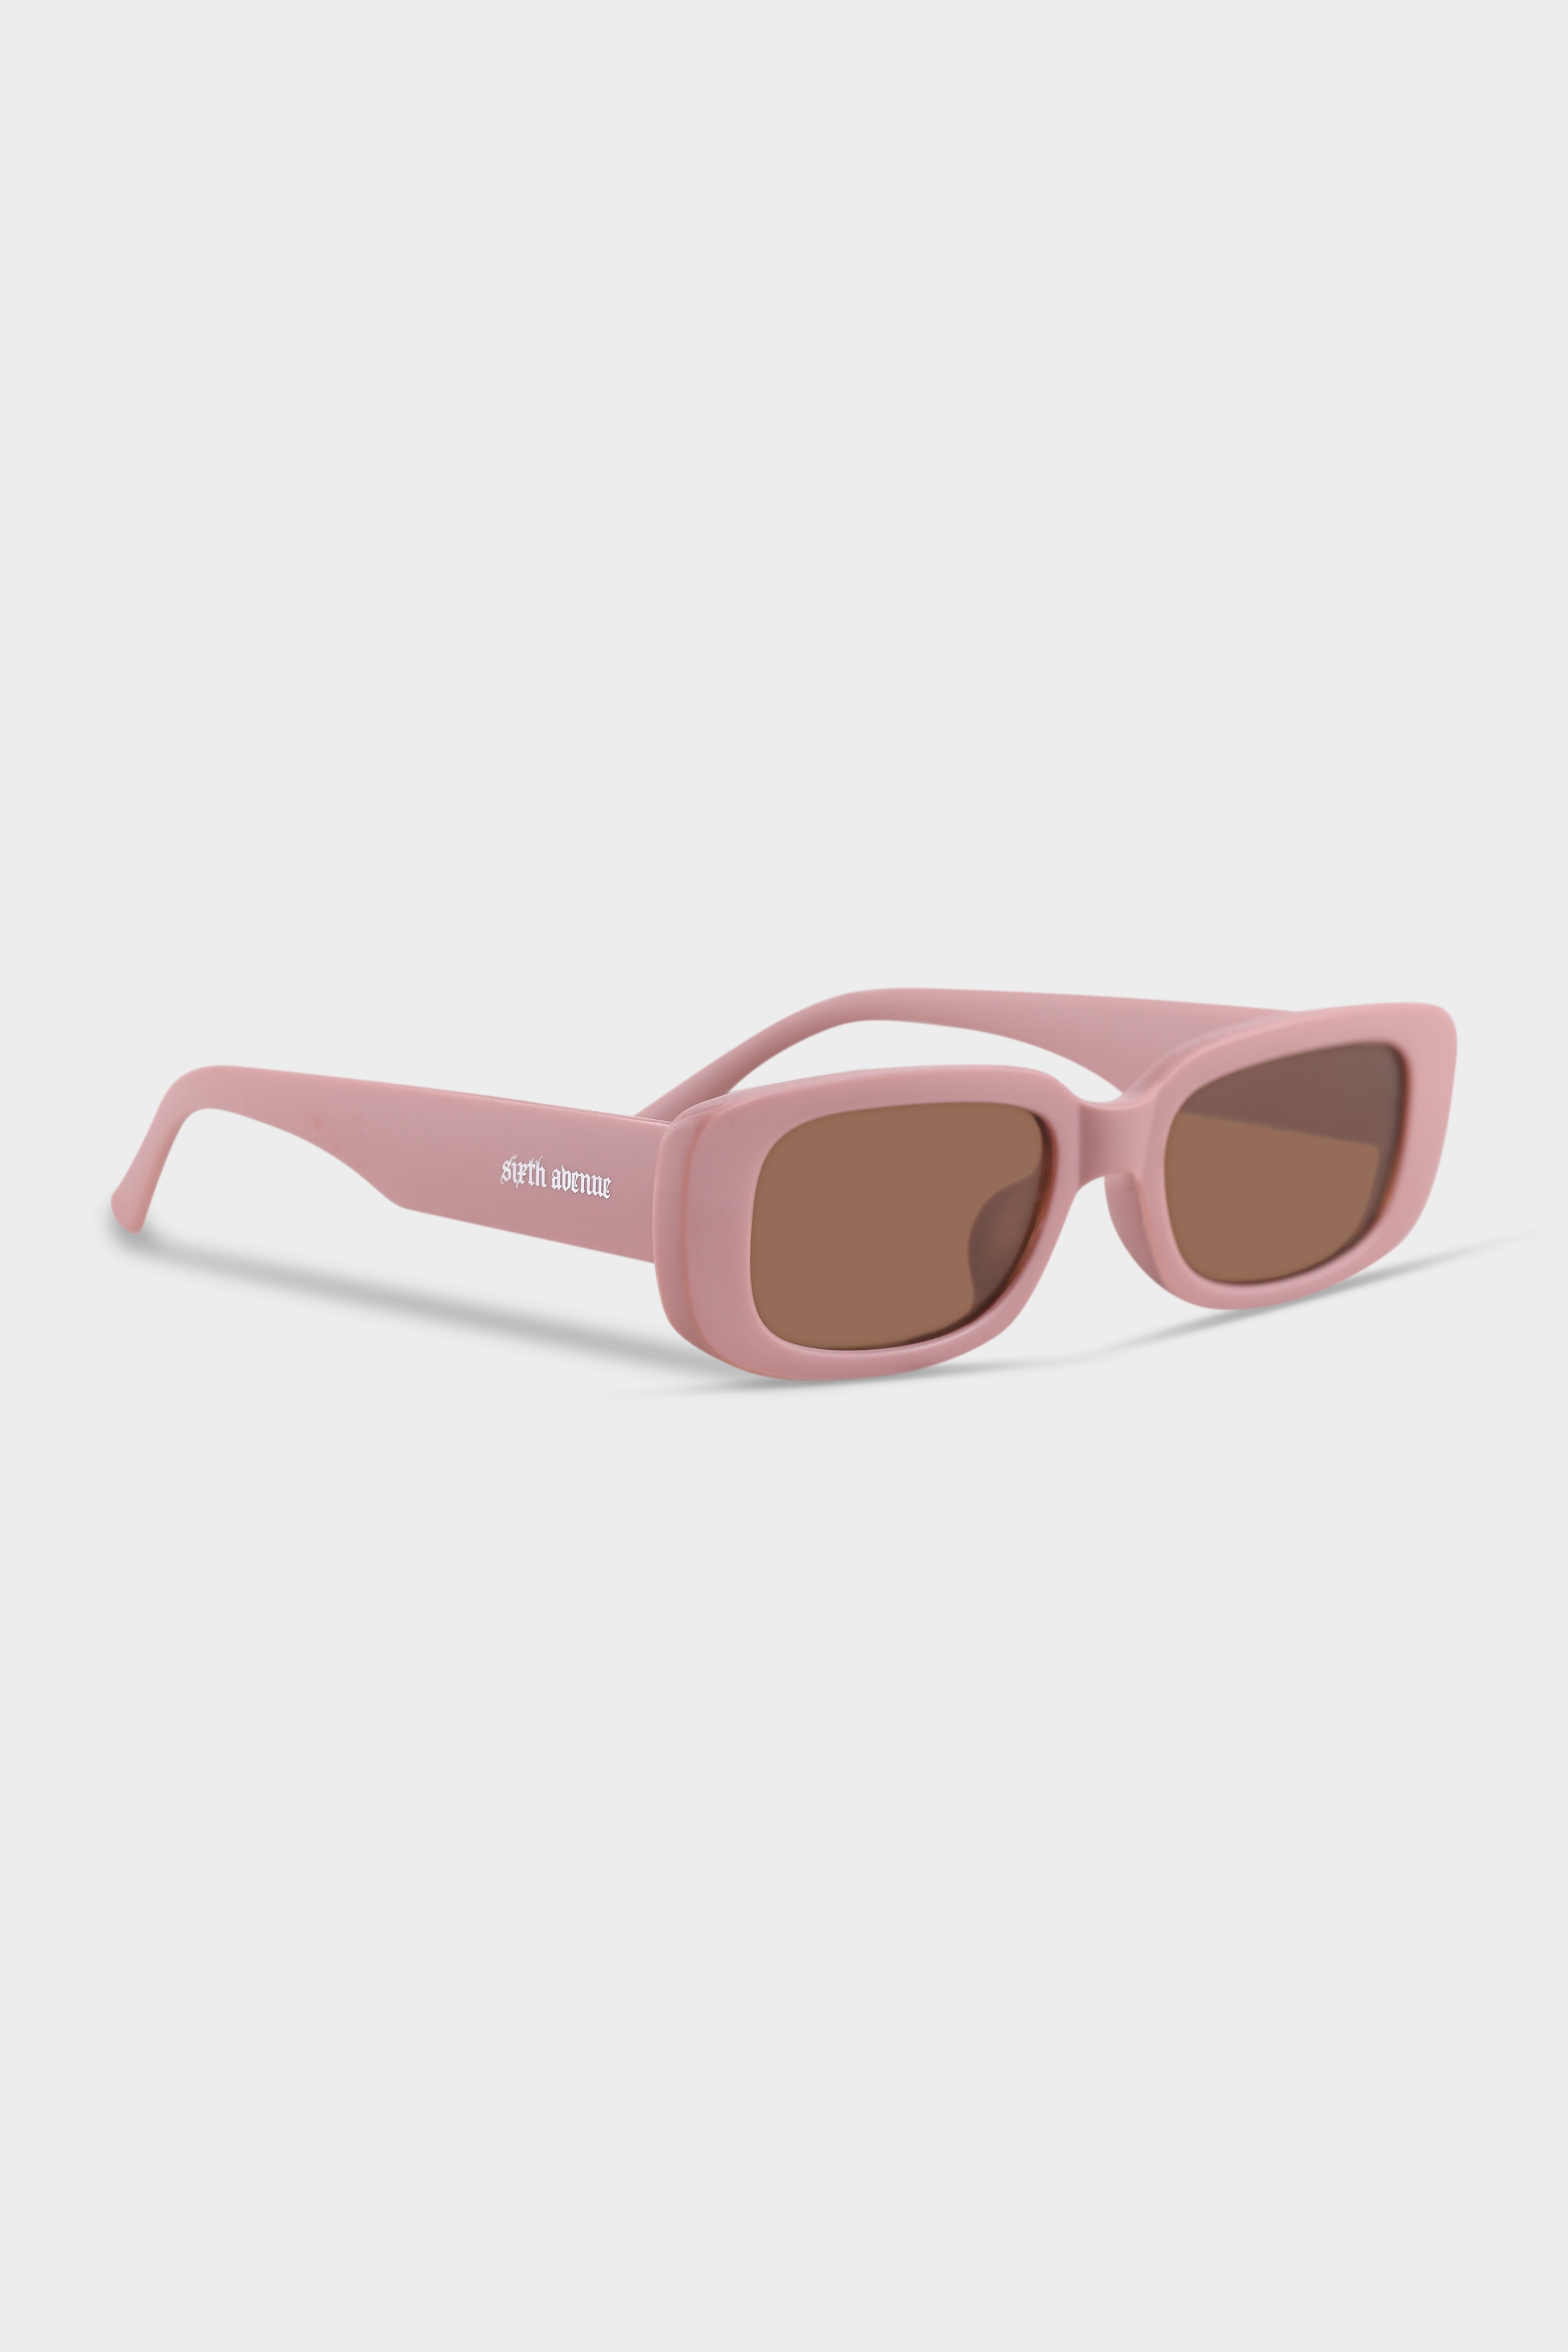 Sixth Avenue Sunglasses Pink Velvet